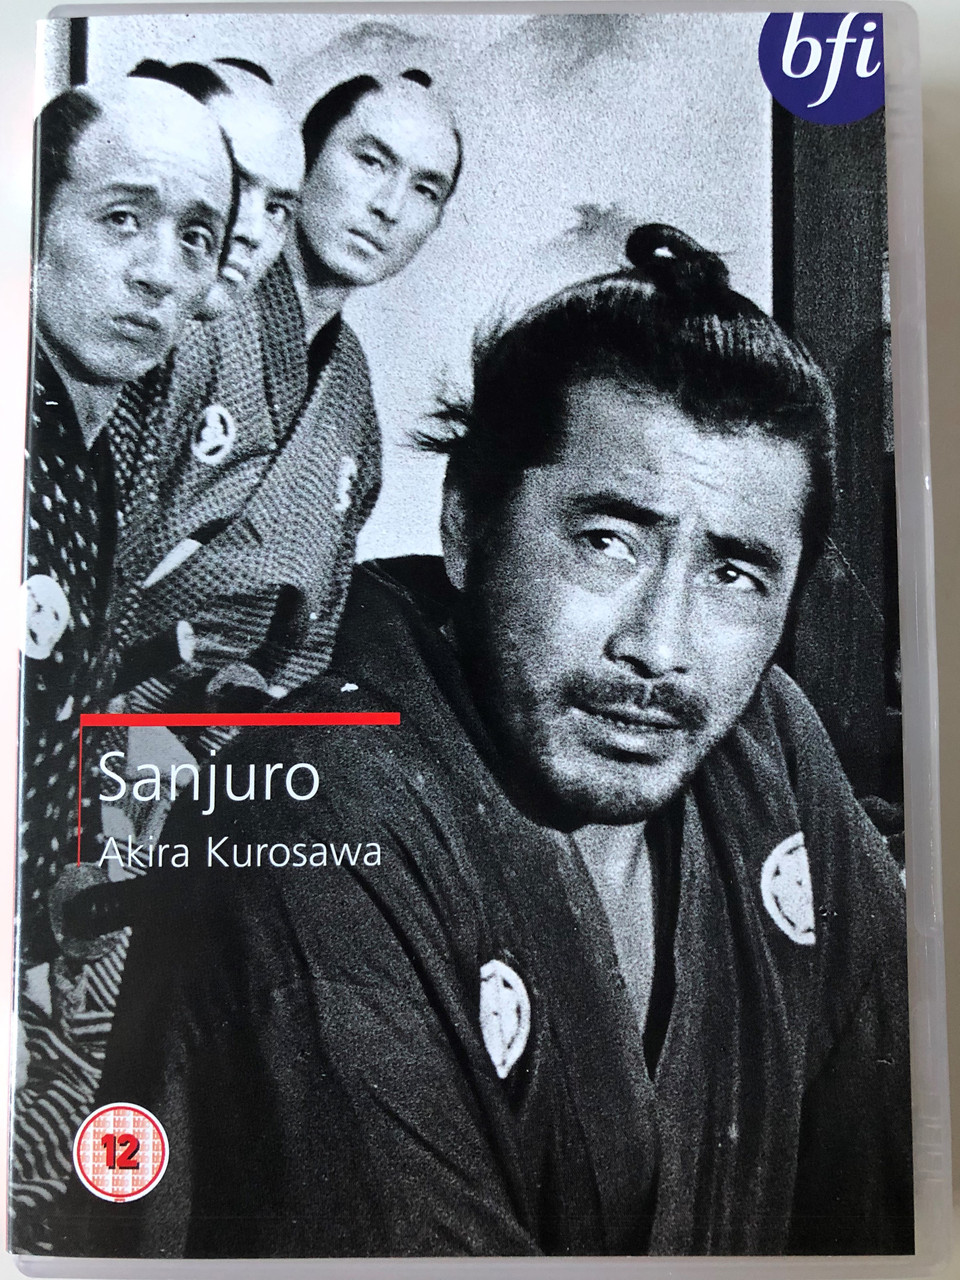 Sanjuro DVD 1962 / Directed by Akira Kurosawa / Starring: Toshiro Mifune,  Tatsuya Nakadai, Keiju Kobayashi - bibleinmylanguage